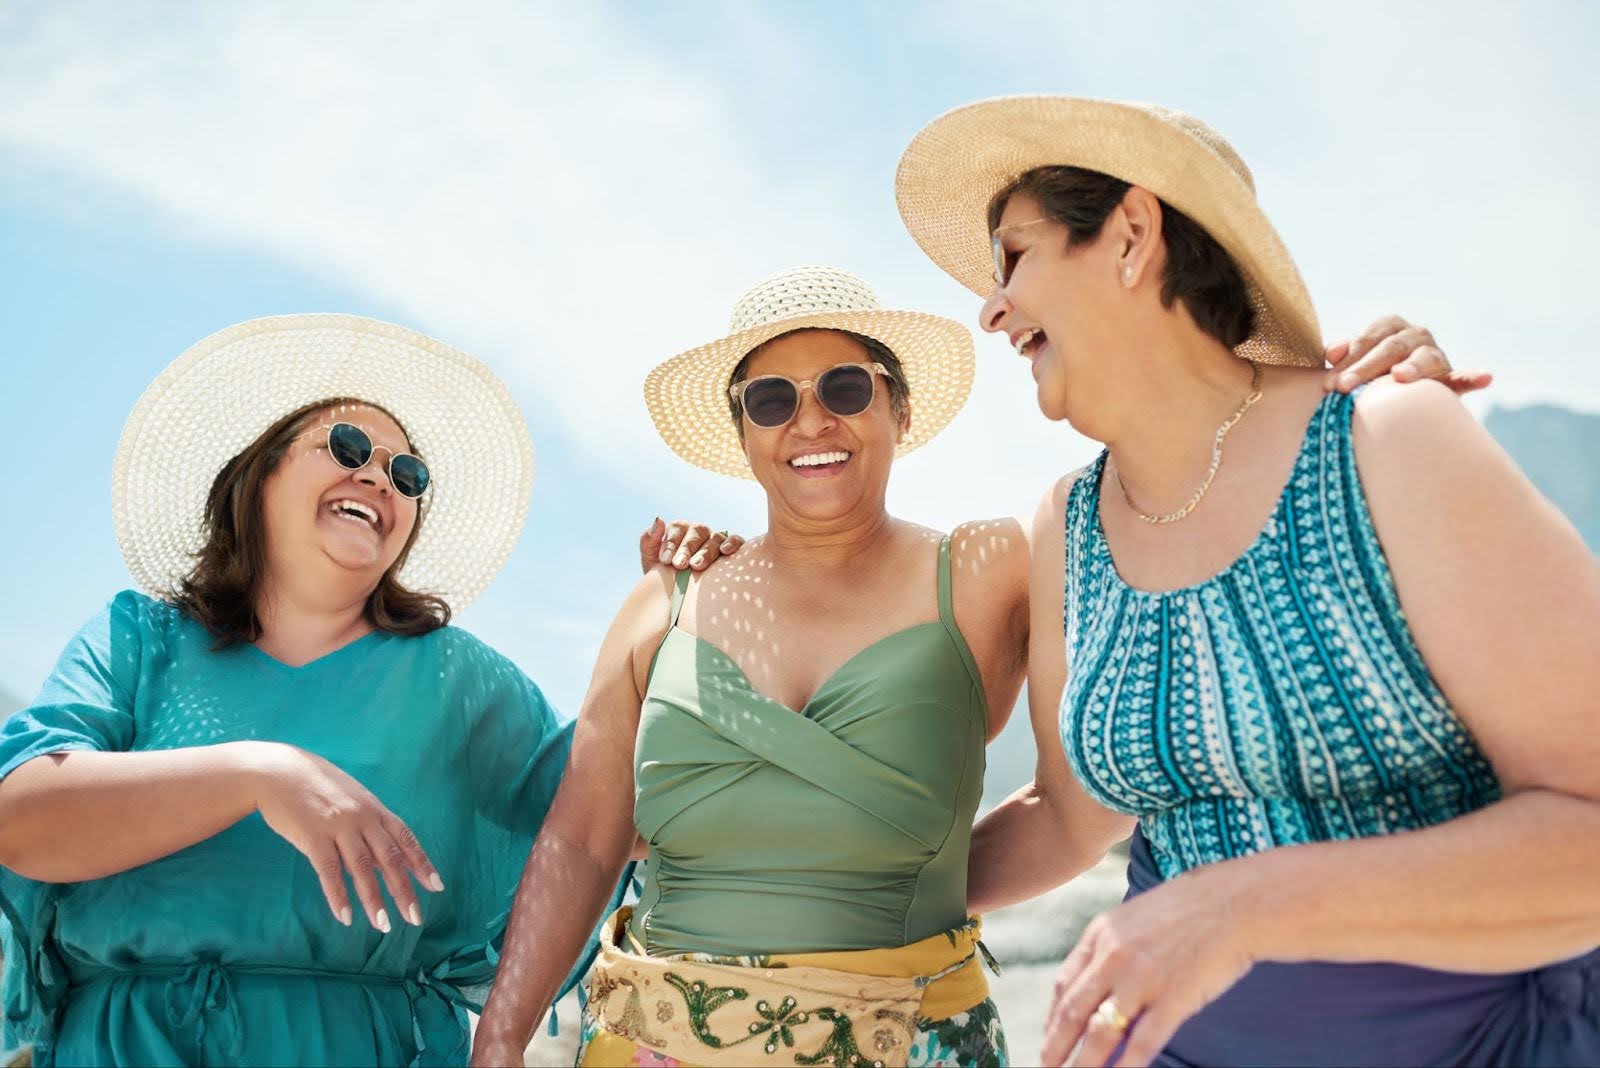 Group of women enjoying the sun in hats